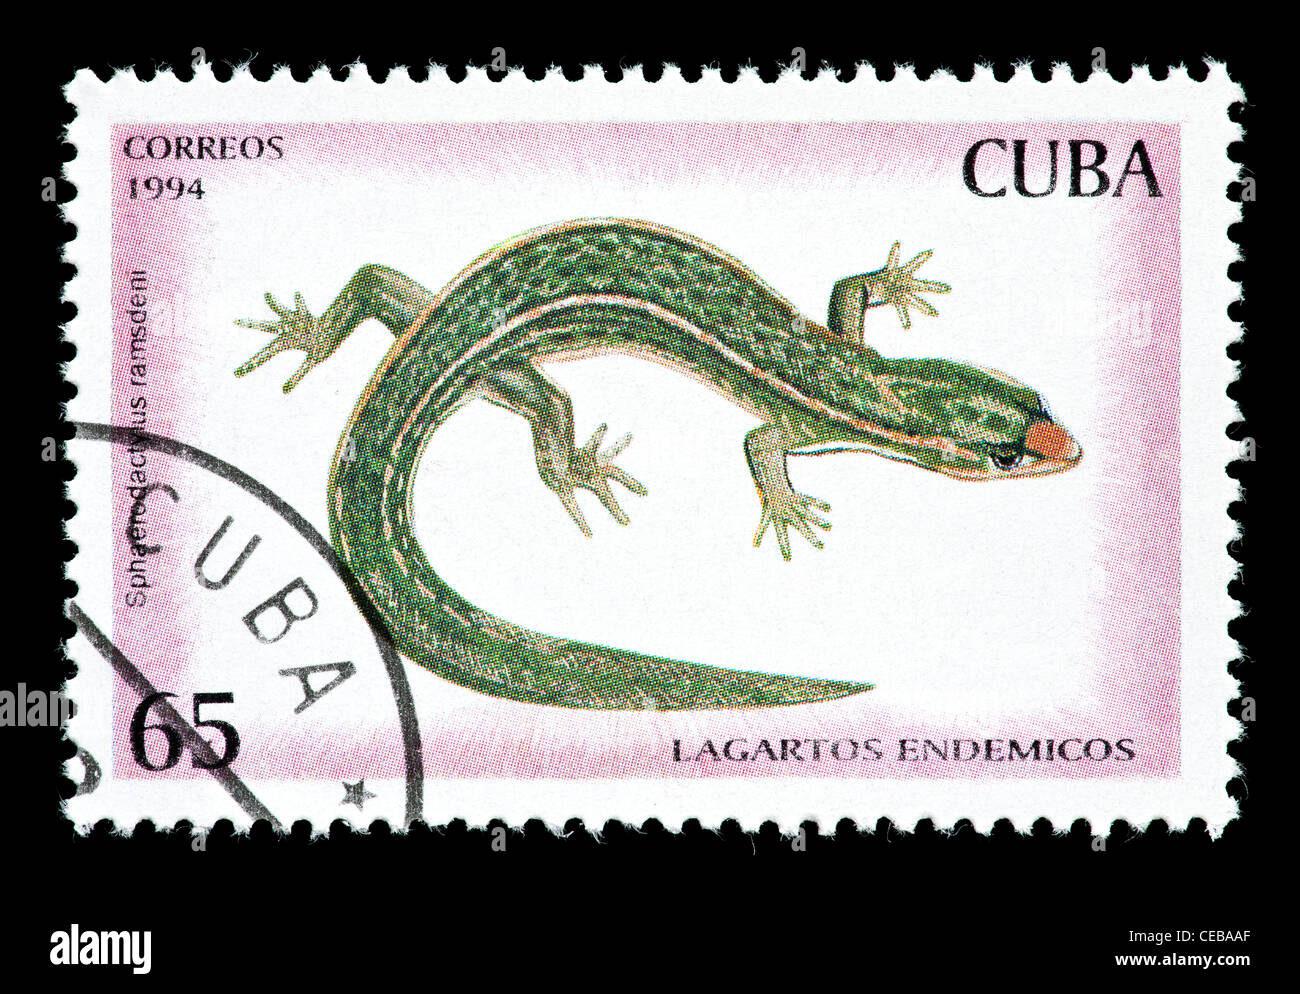 Postage stamp from Cuba depicting Ramsden's Least Gecko (Sphaerodactylus ramsdeni) Stock Photo